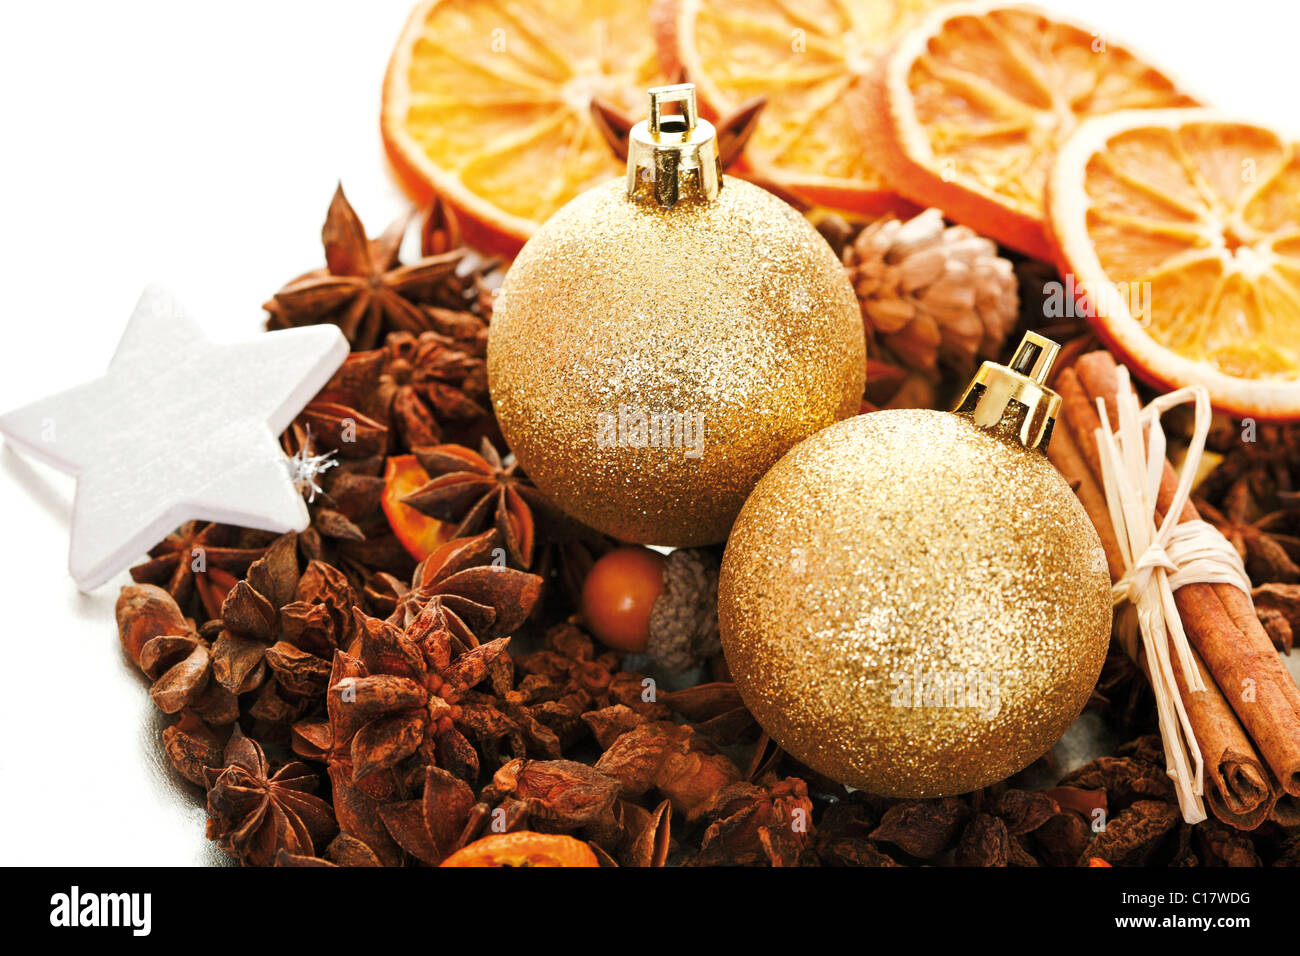 Christmas platter with decorative star, cinnamon sticks, star anise, Christmas tree balls and dried orange slices Stock Photo